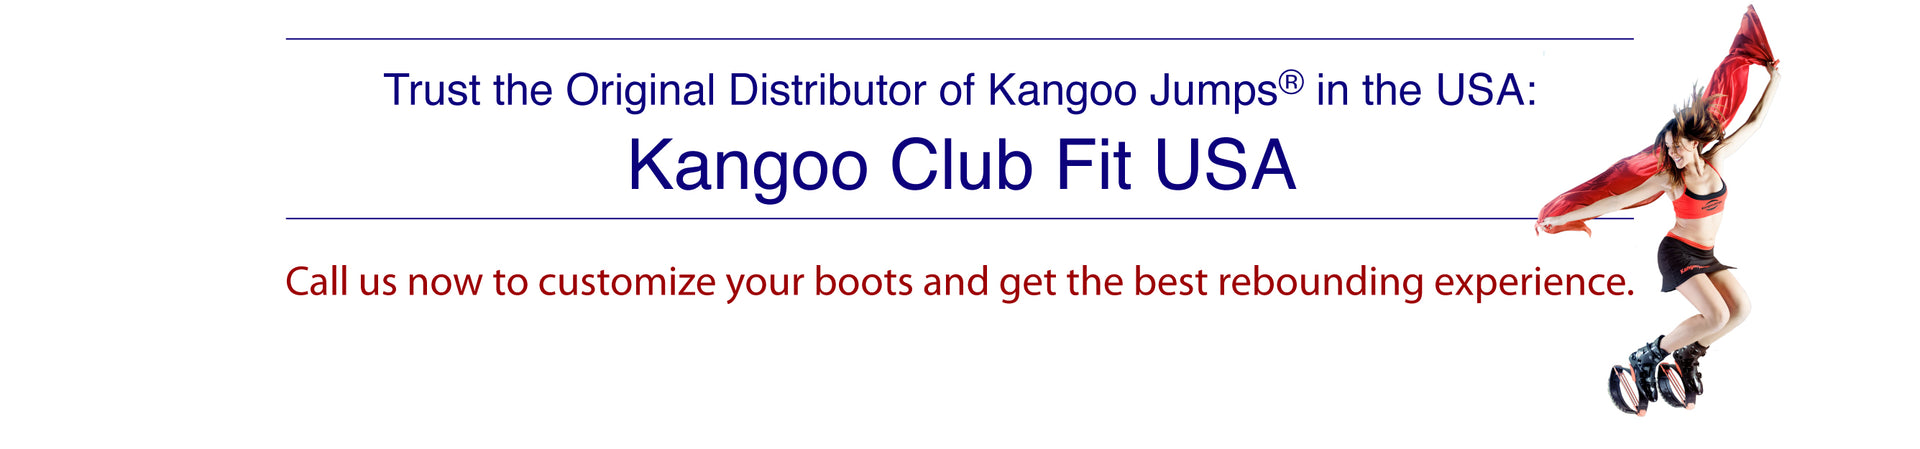 Kangoo Jumps XR3 White Edition in White/Black – Kangoo Club Fit USA